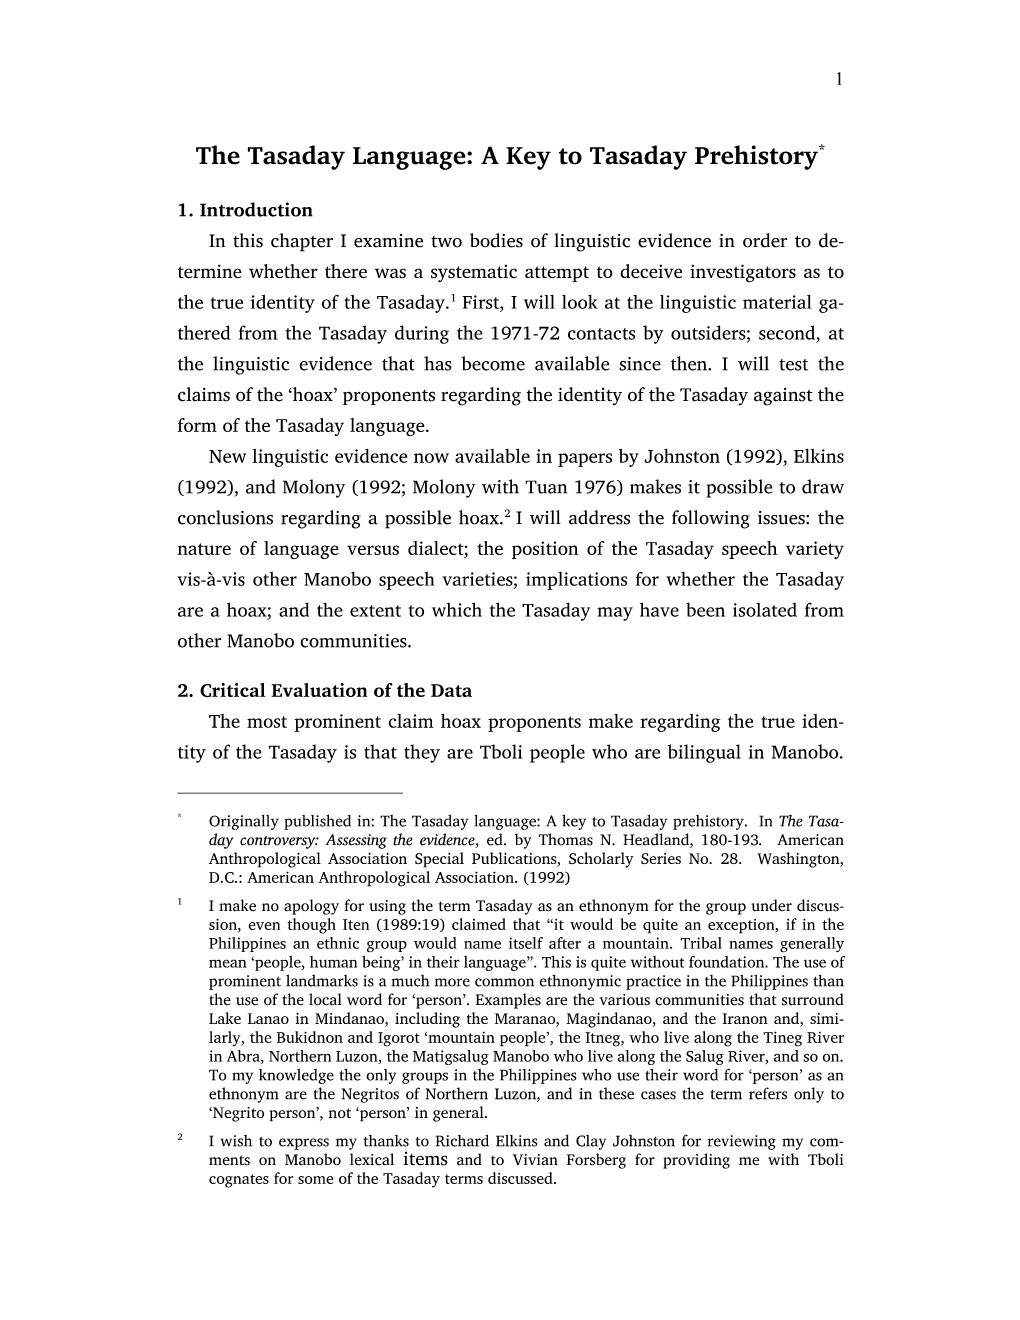 The Tasaday Language: a Key to Tasaday Prehistory*